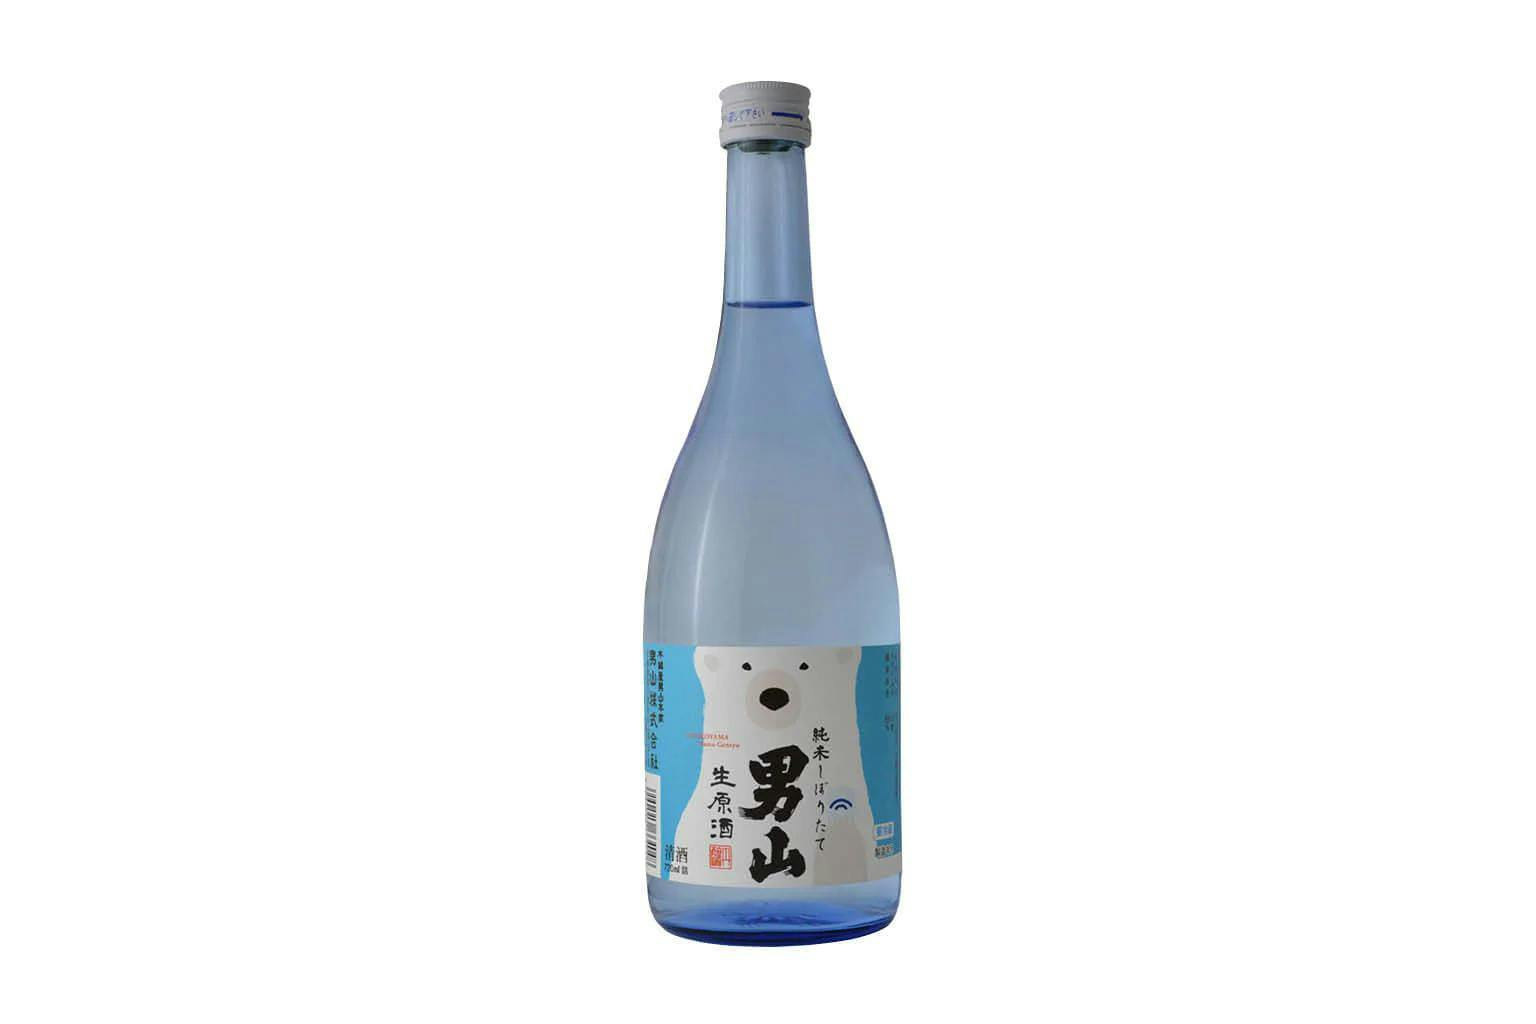 Bottle of Otokoyama Shiboritate